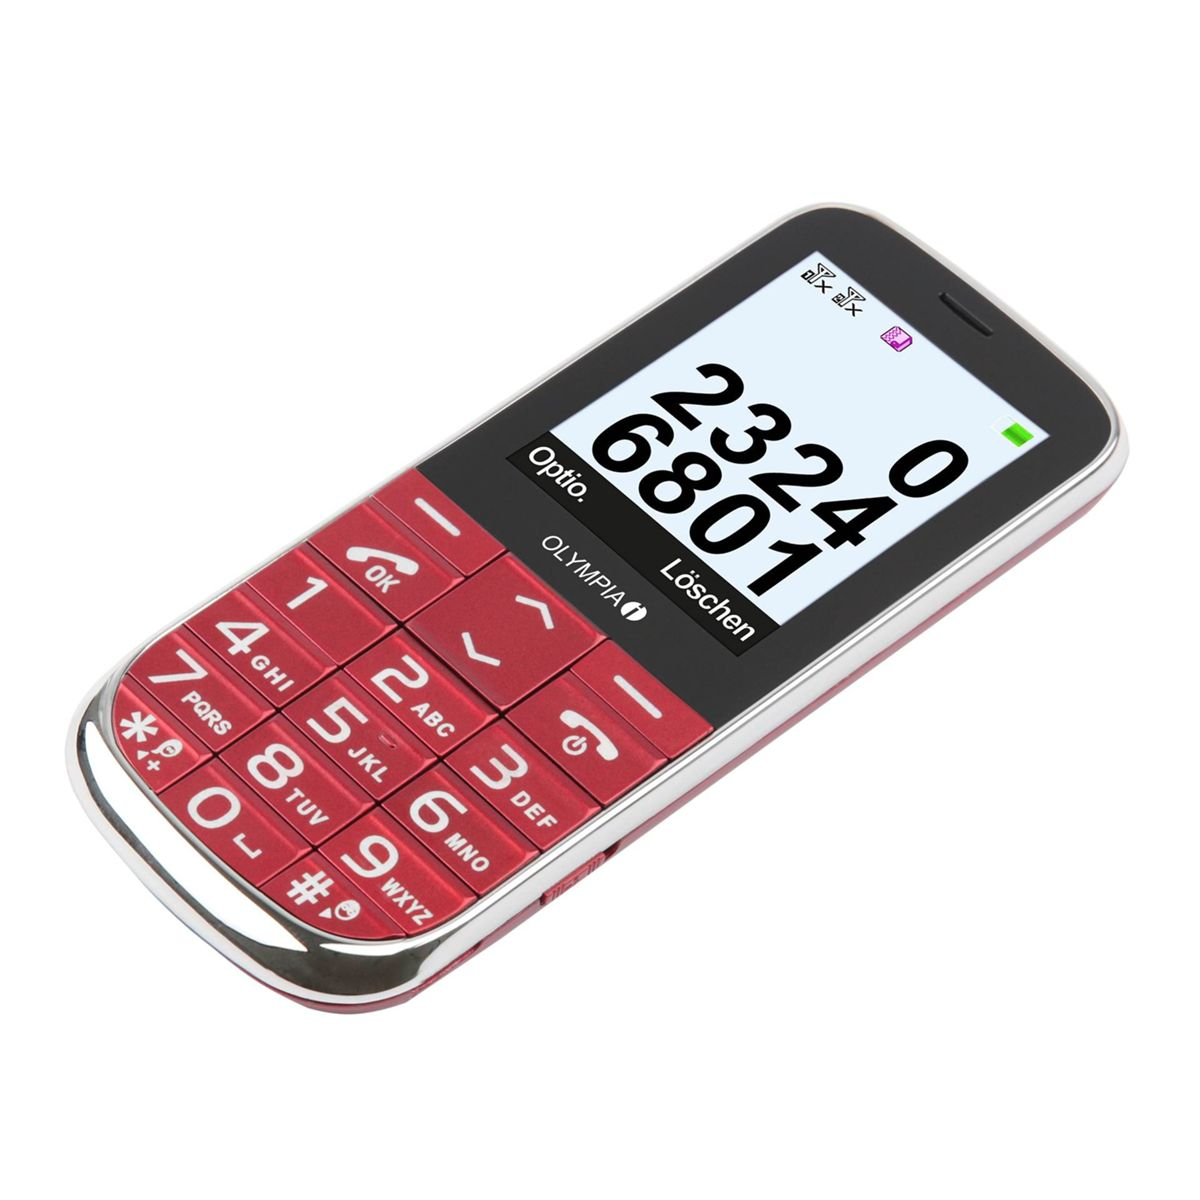 OLYMPIA 2220 Mobiltelefon, Rot